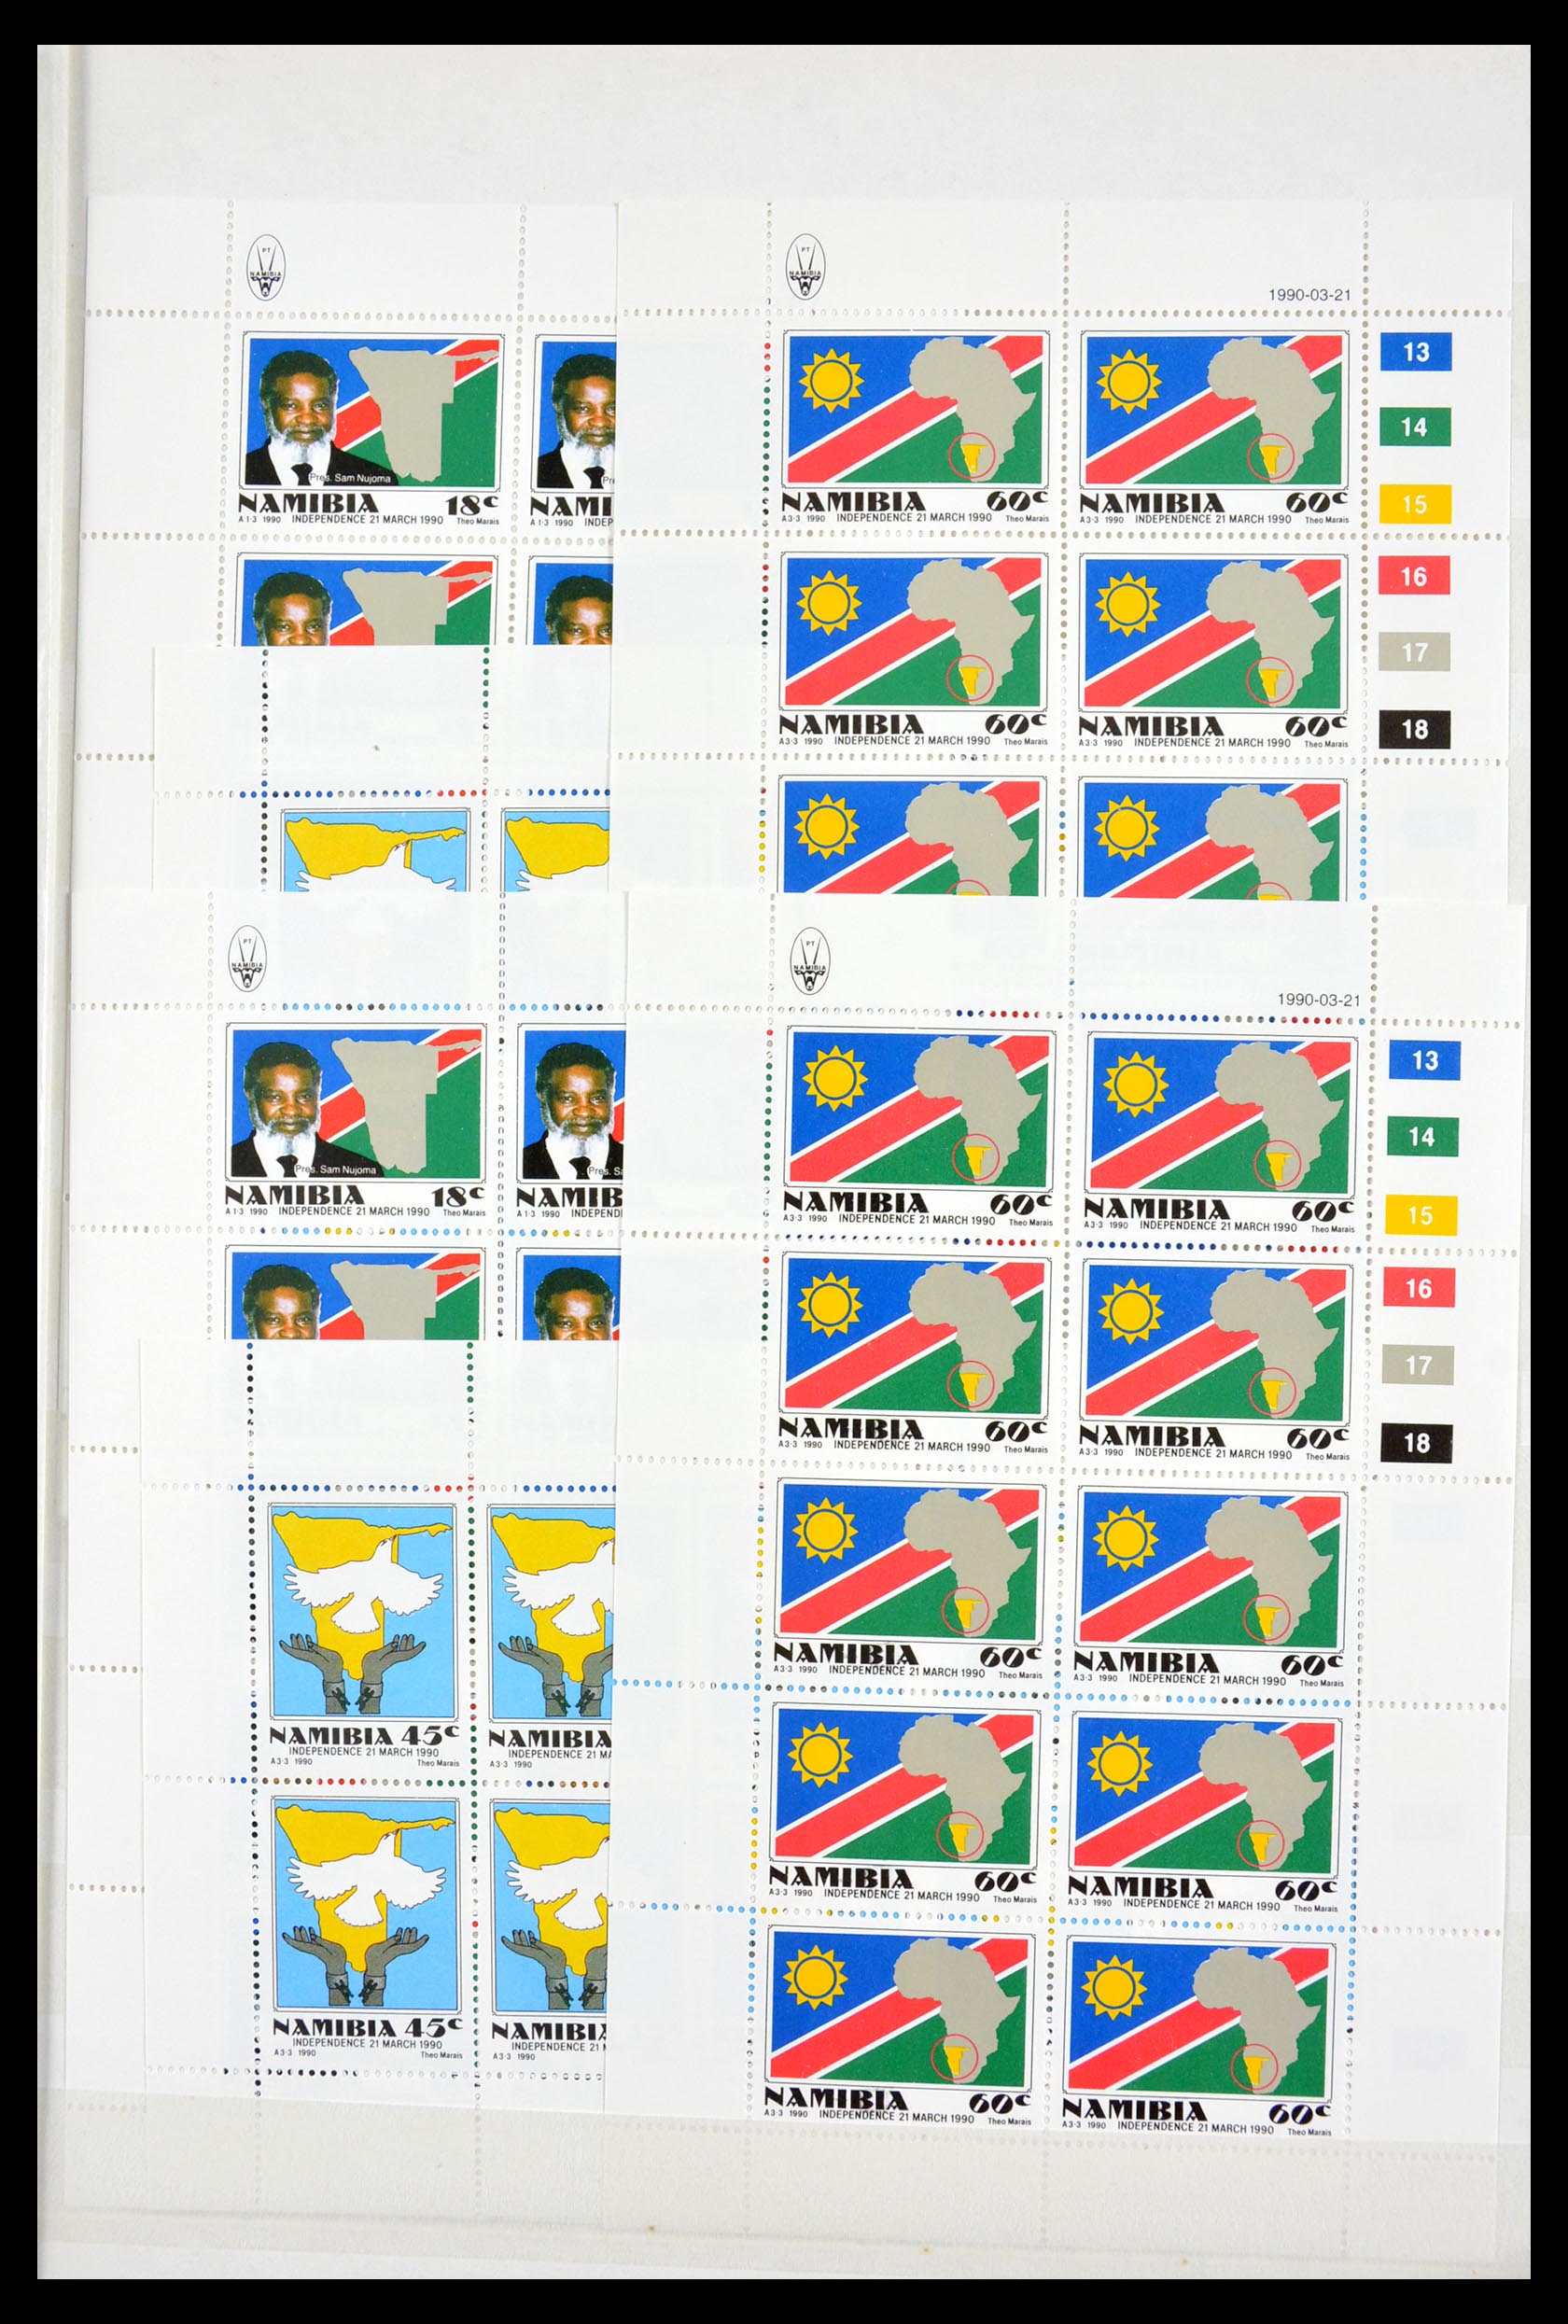 29584 112 - 29584 World souvenir sheets 1980-2011.